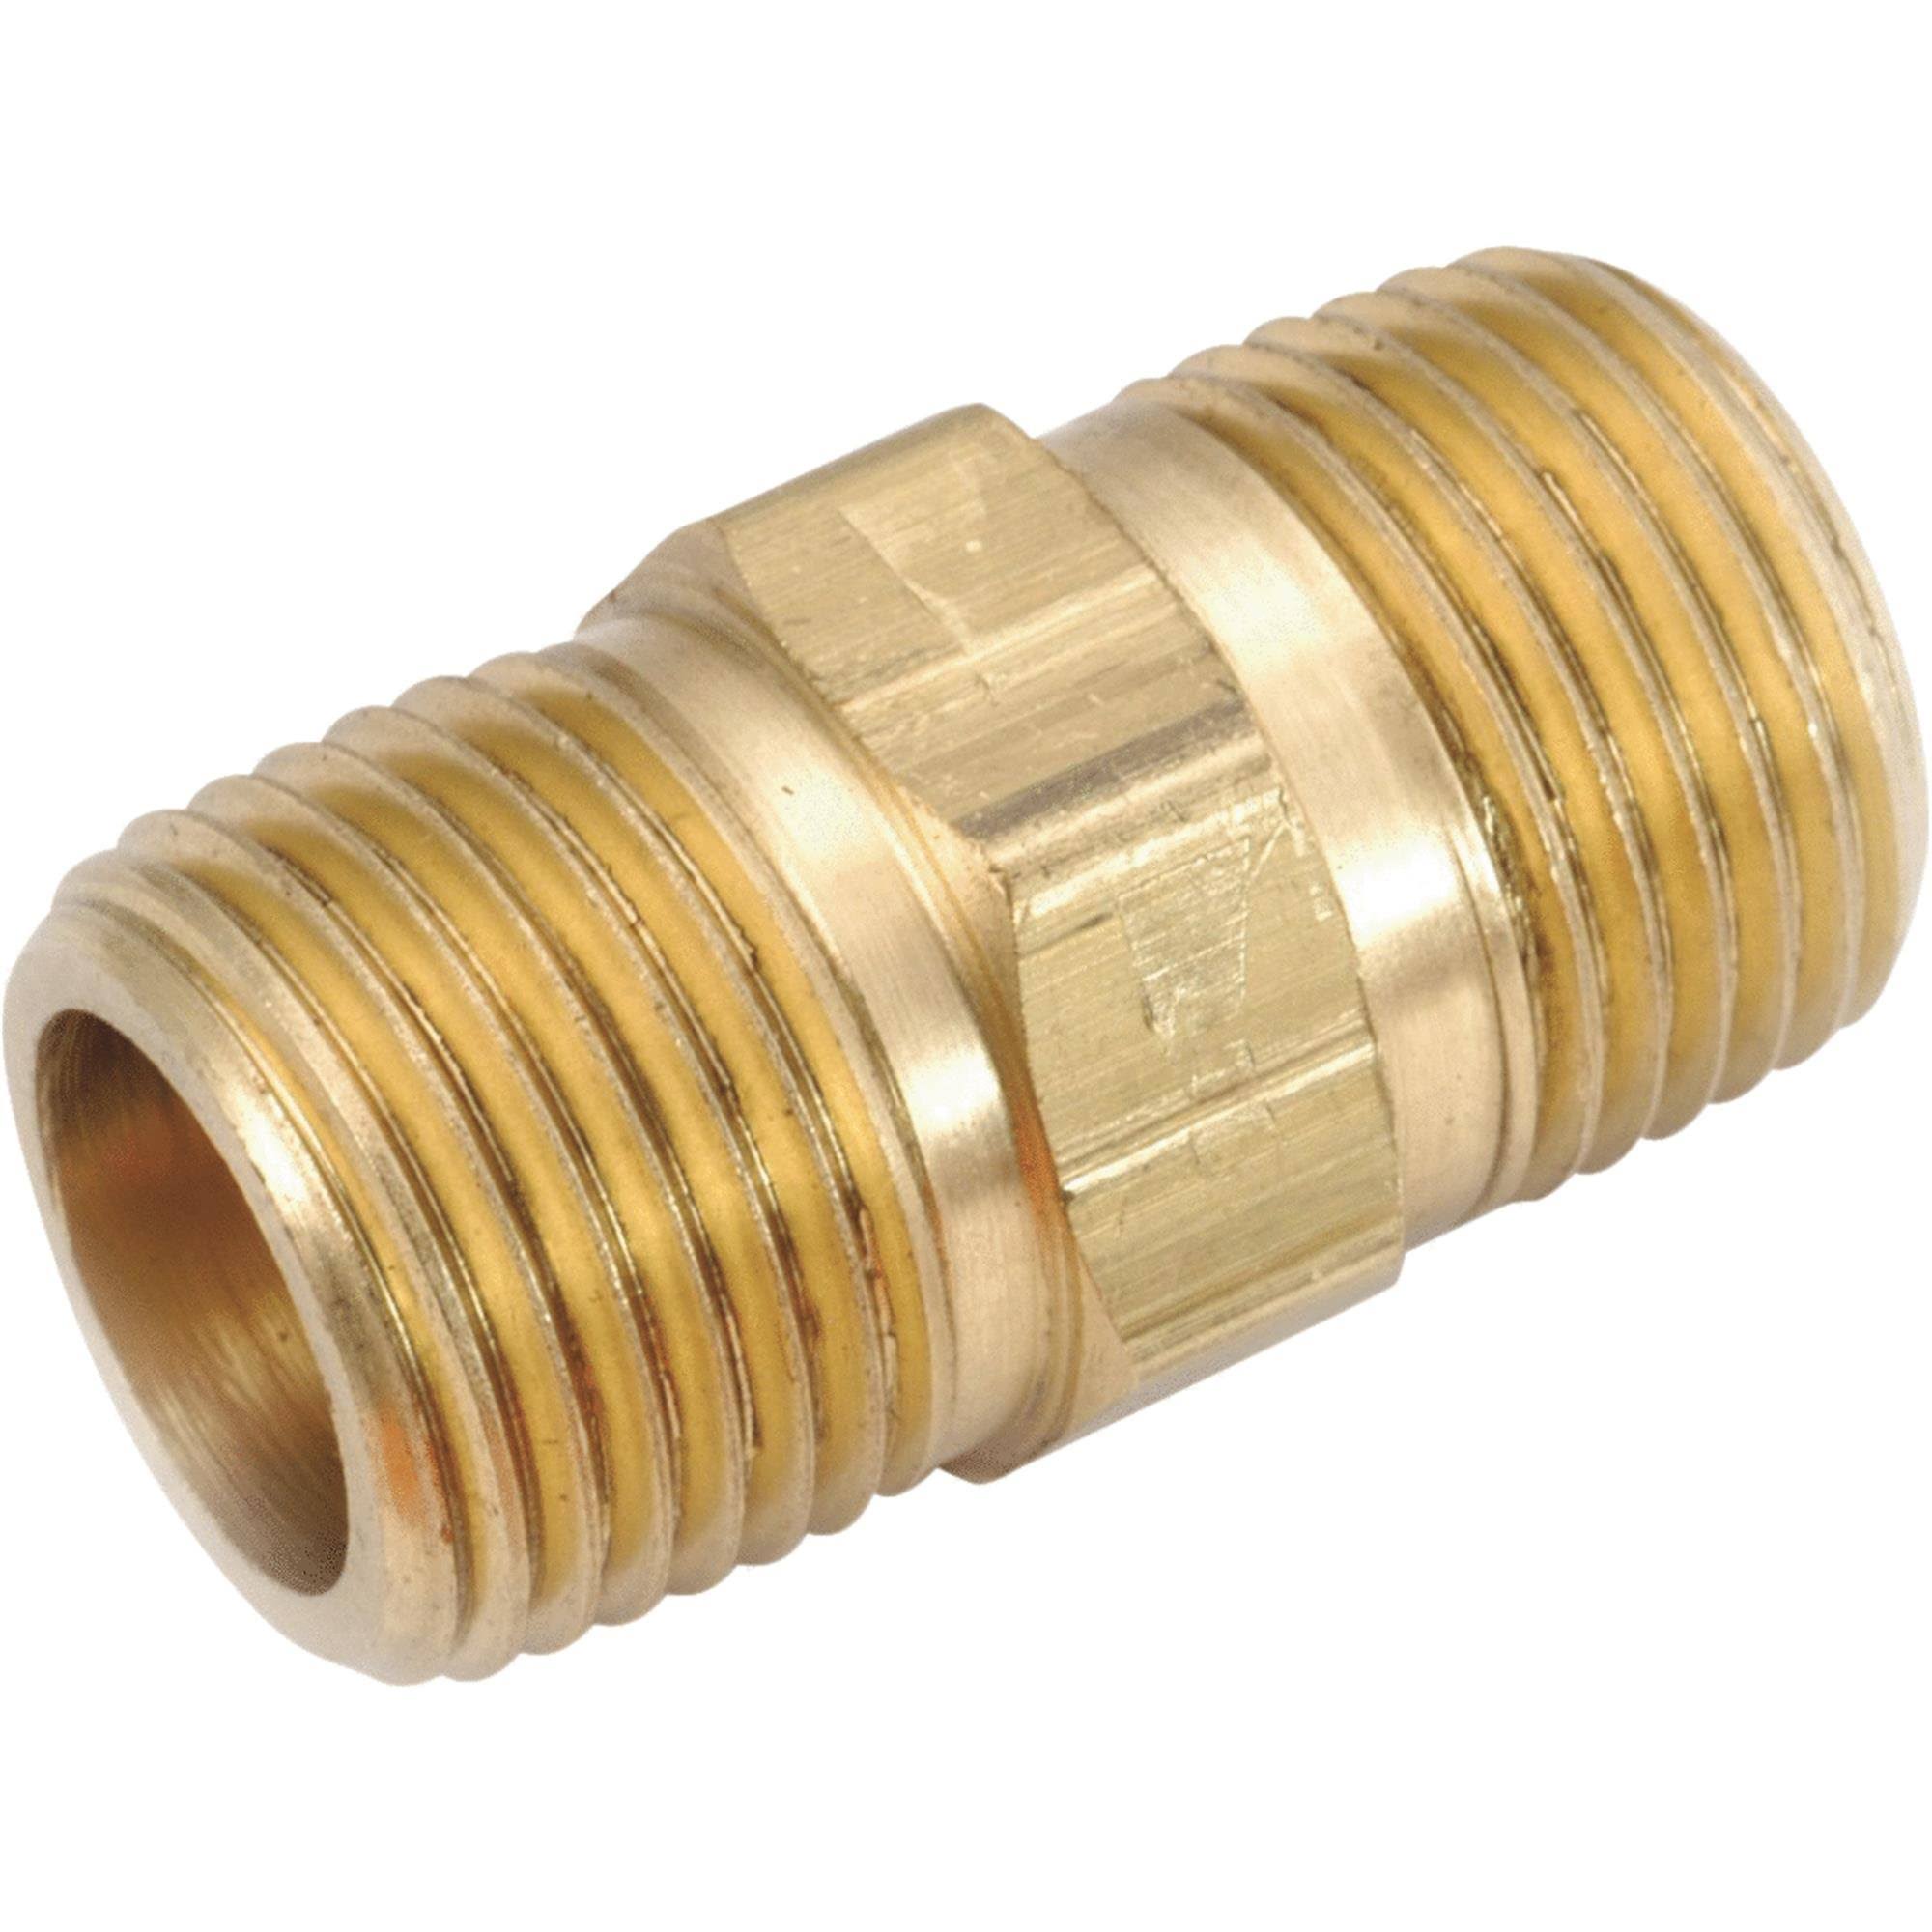 Anderson Metals 75612204 Hex Brass Nipple Fitting - 3pk